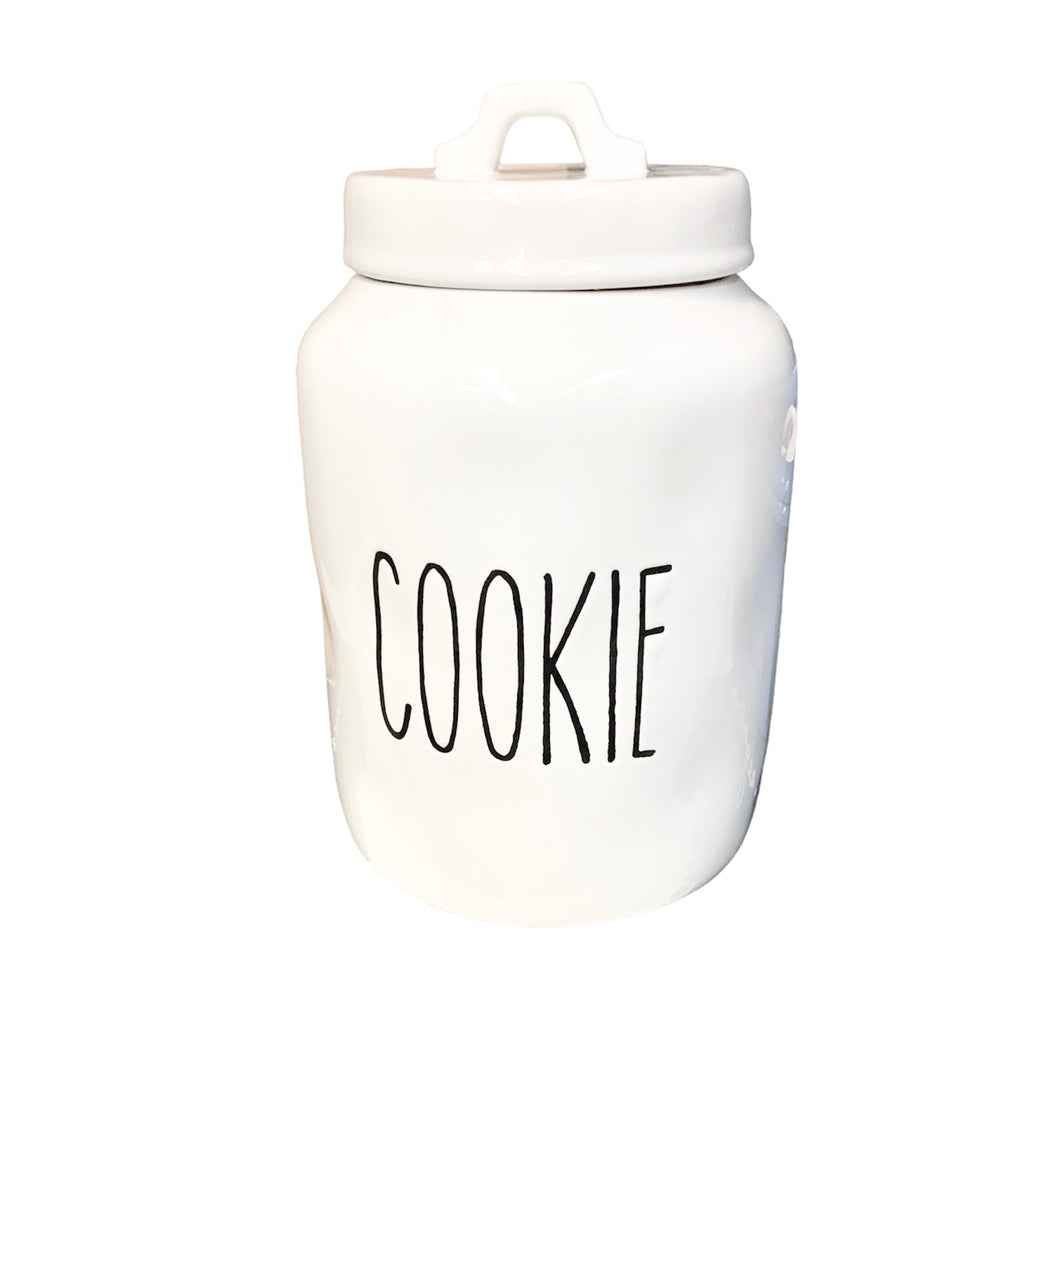 Rae Dunn Inspired Cookie Jar